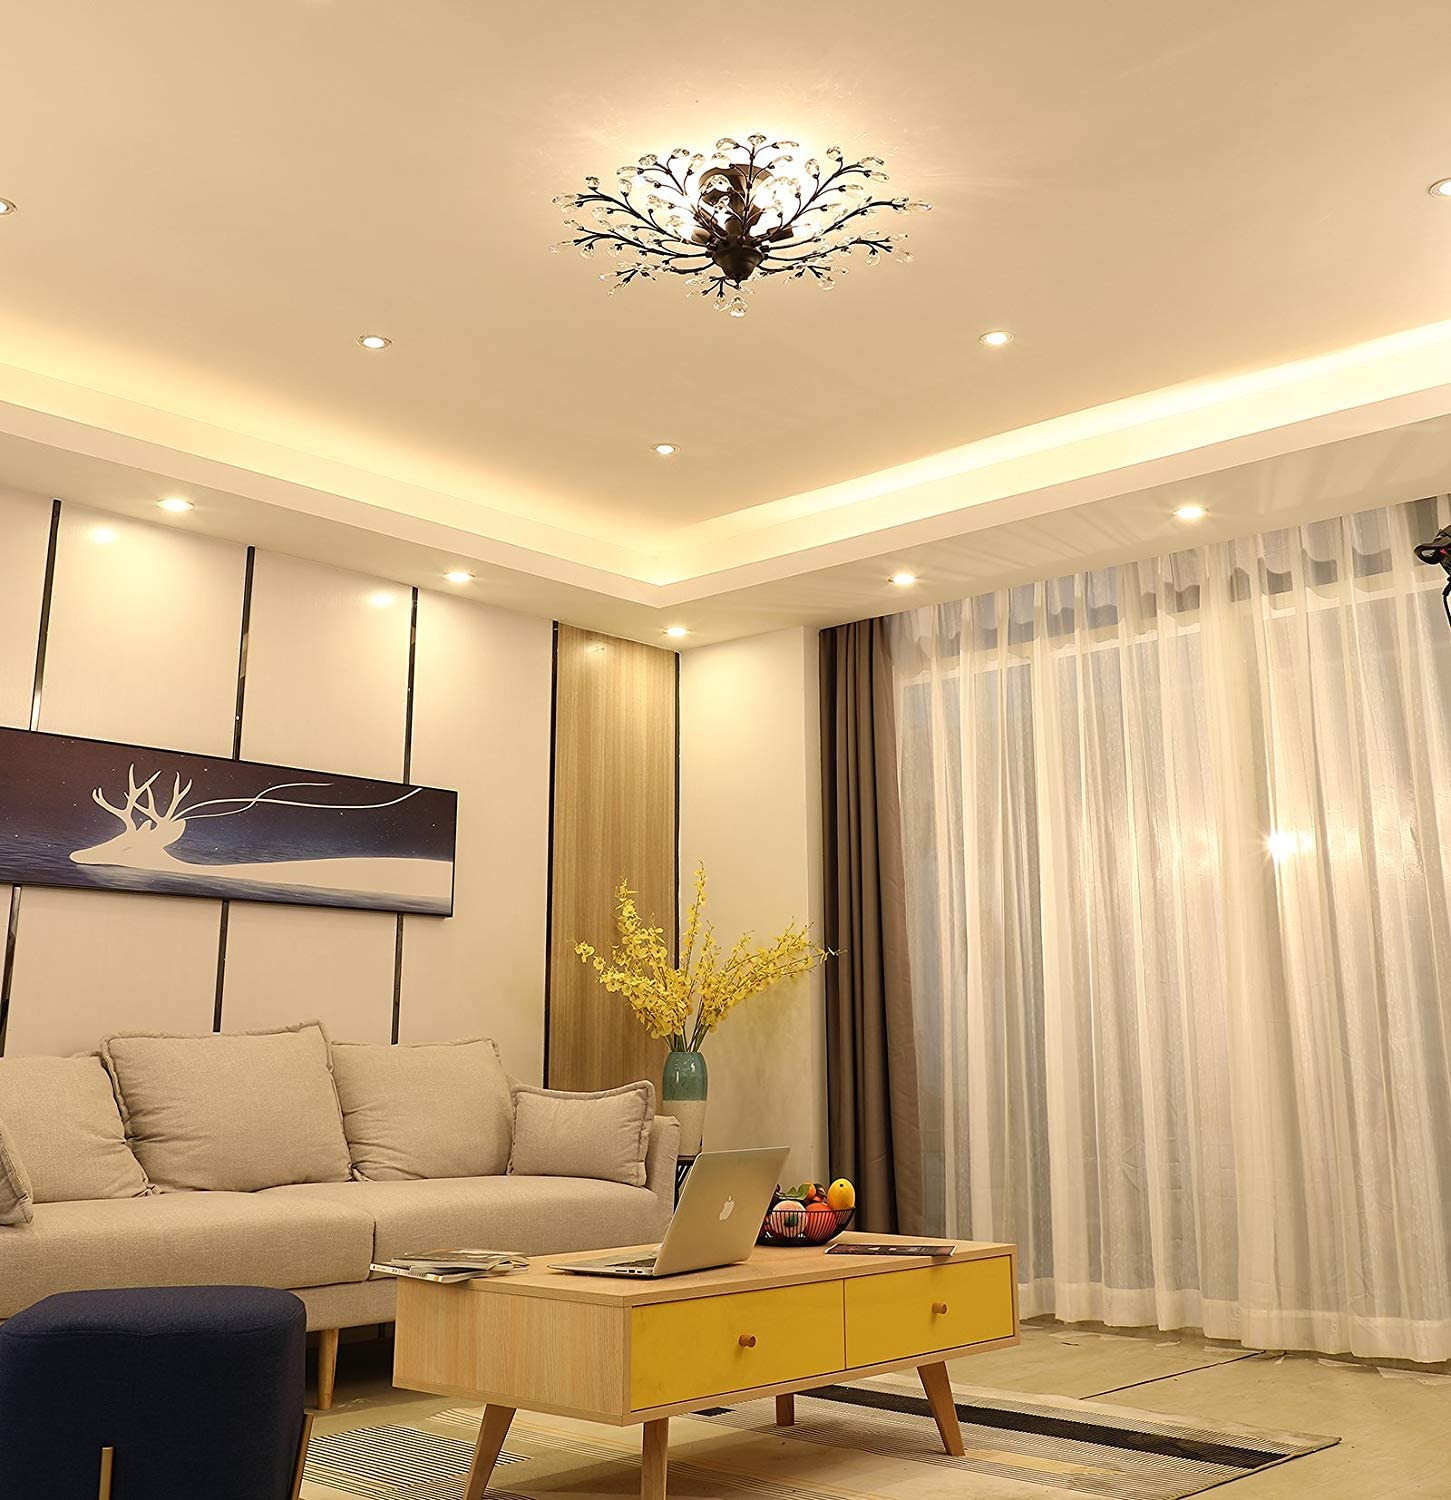 INJUICY Crystal Chandeliers K9 Led Ceiling Lights 9 Lamps Buy - Best Online Lighting Stores